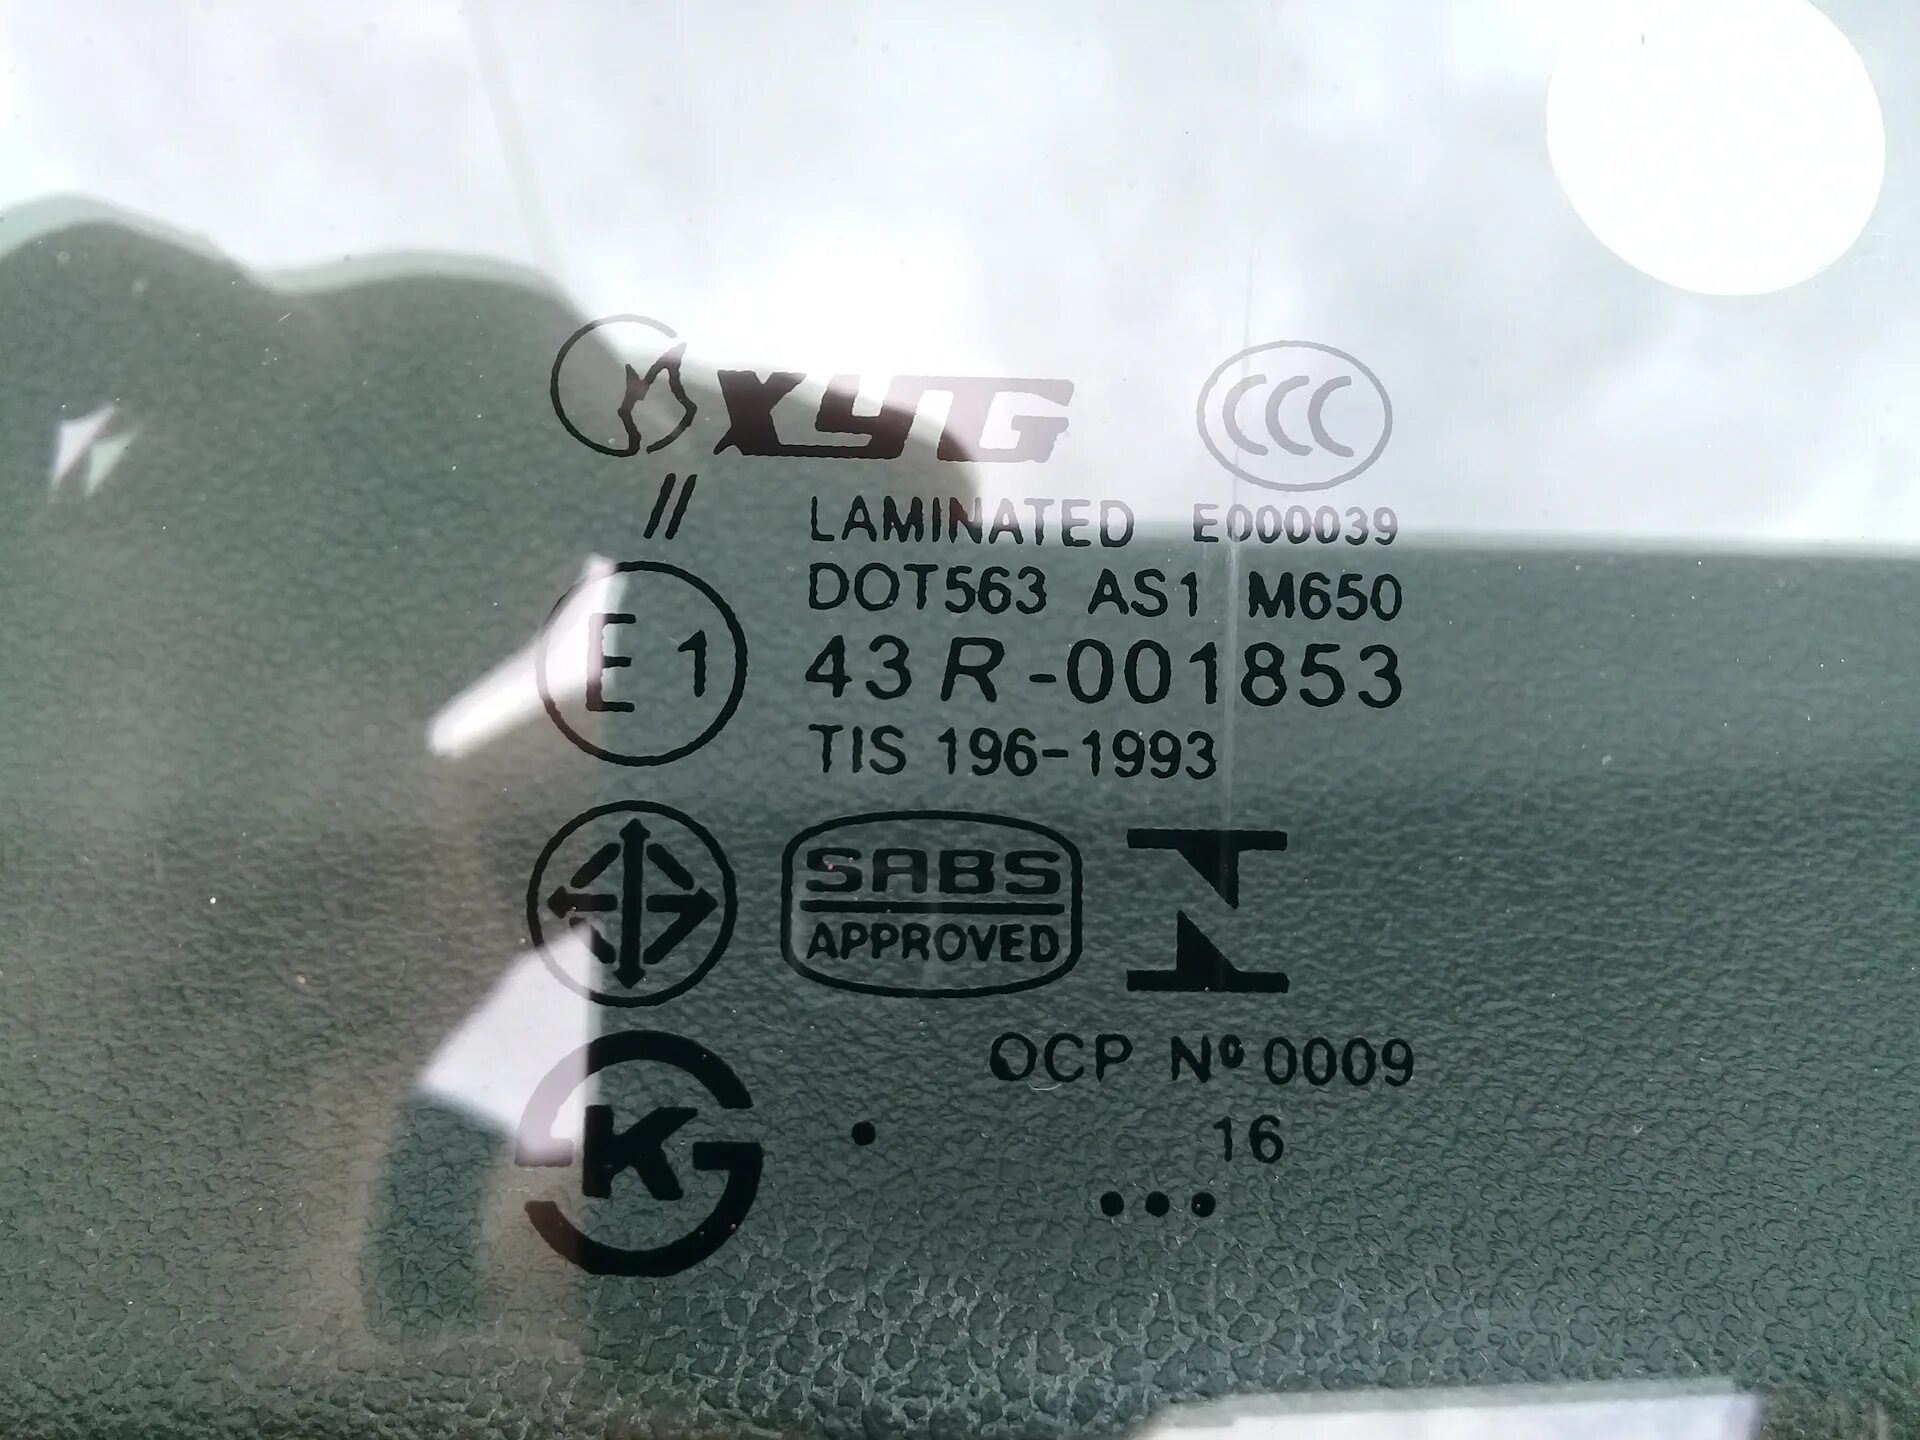 Автостекла xyg. 43r 001853 лобовое стекло. XYG Laminated Safety Glass Dot-563as-1m658. XYG Laminated 43r-001853. 43r-001853 XYG Dot 563 as1 m650.